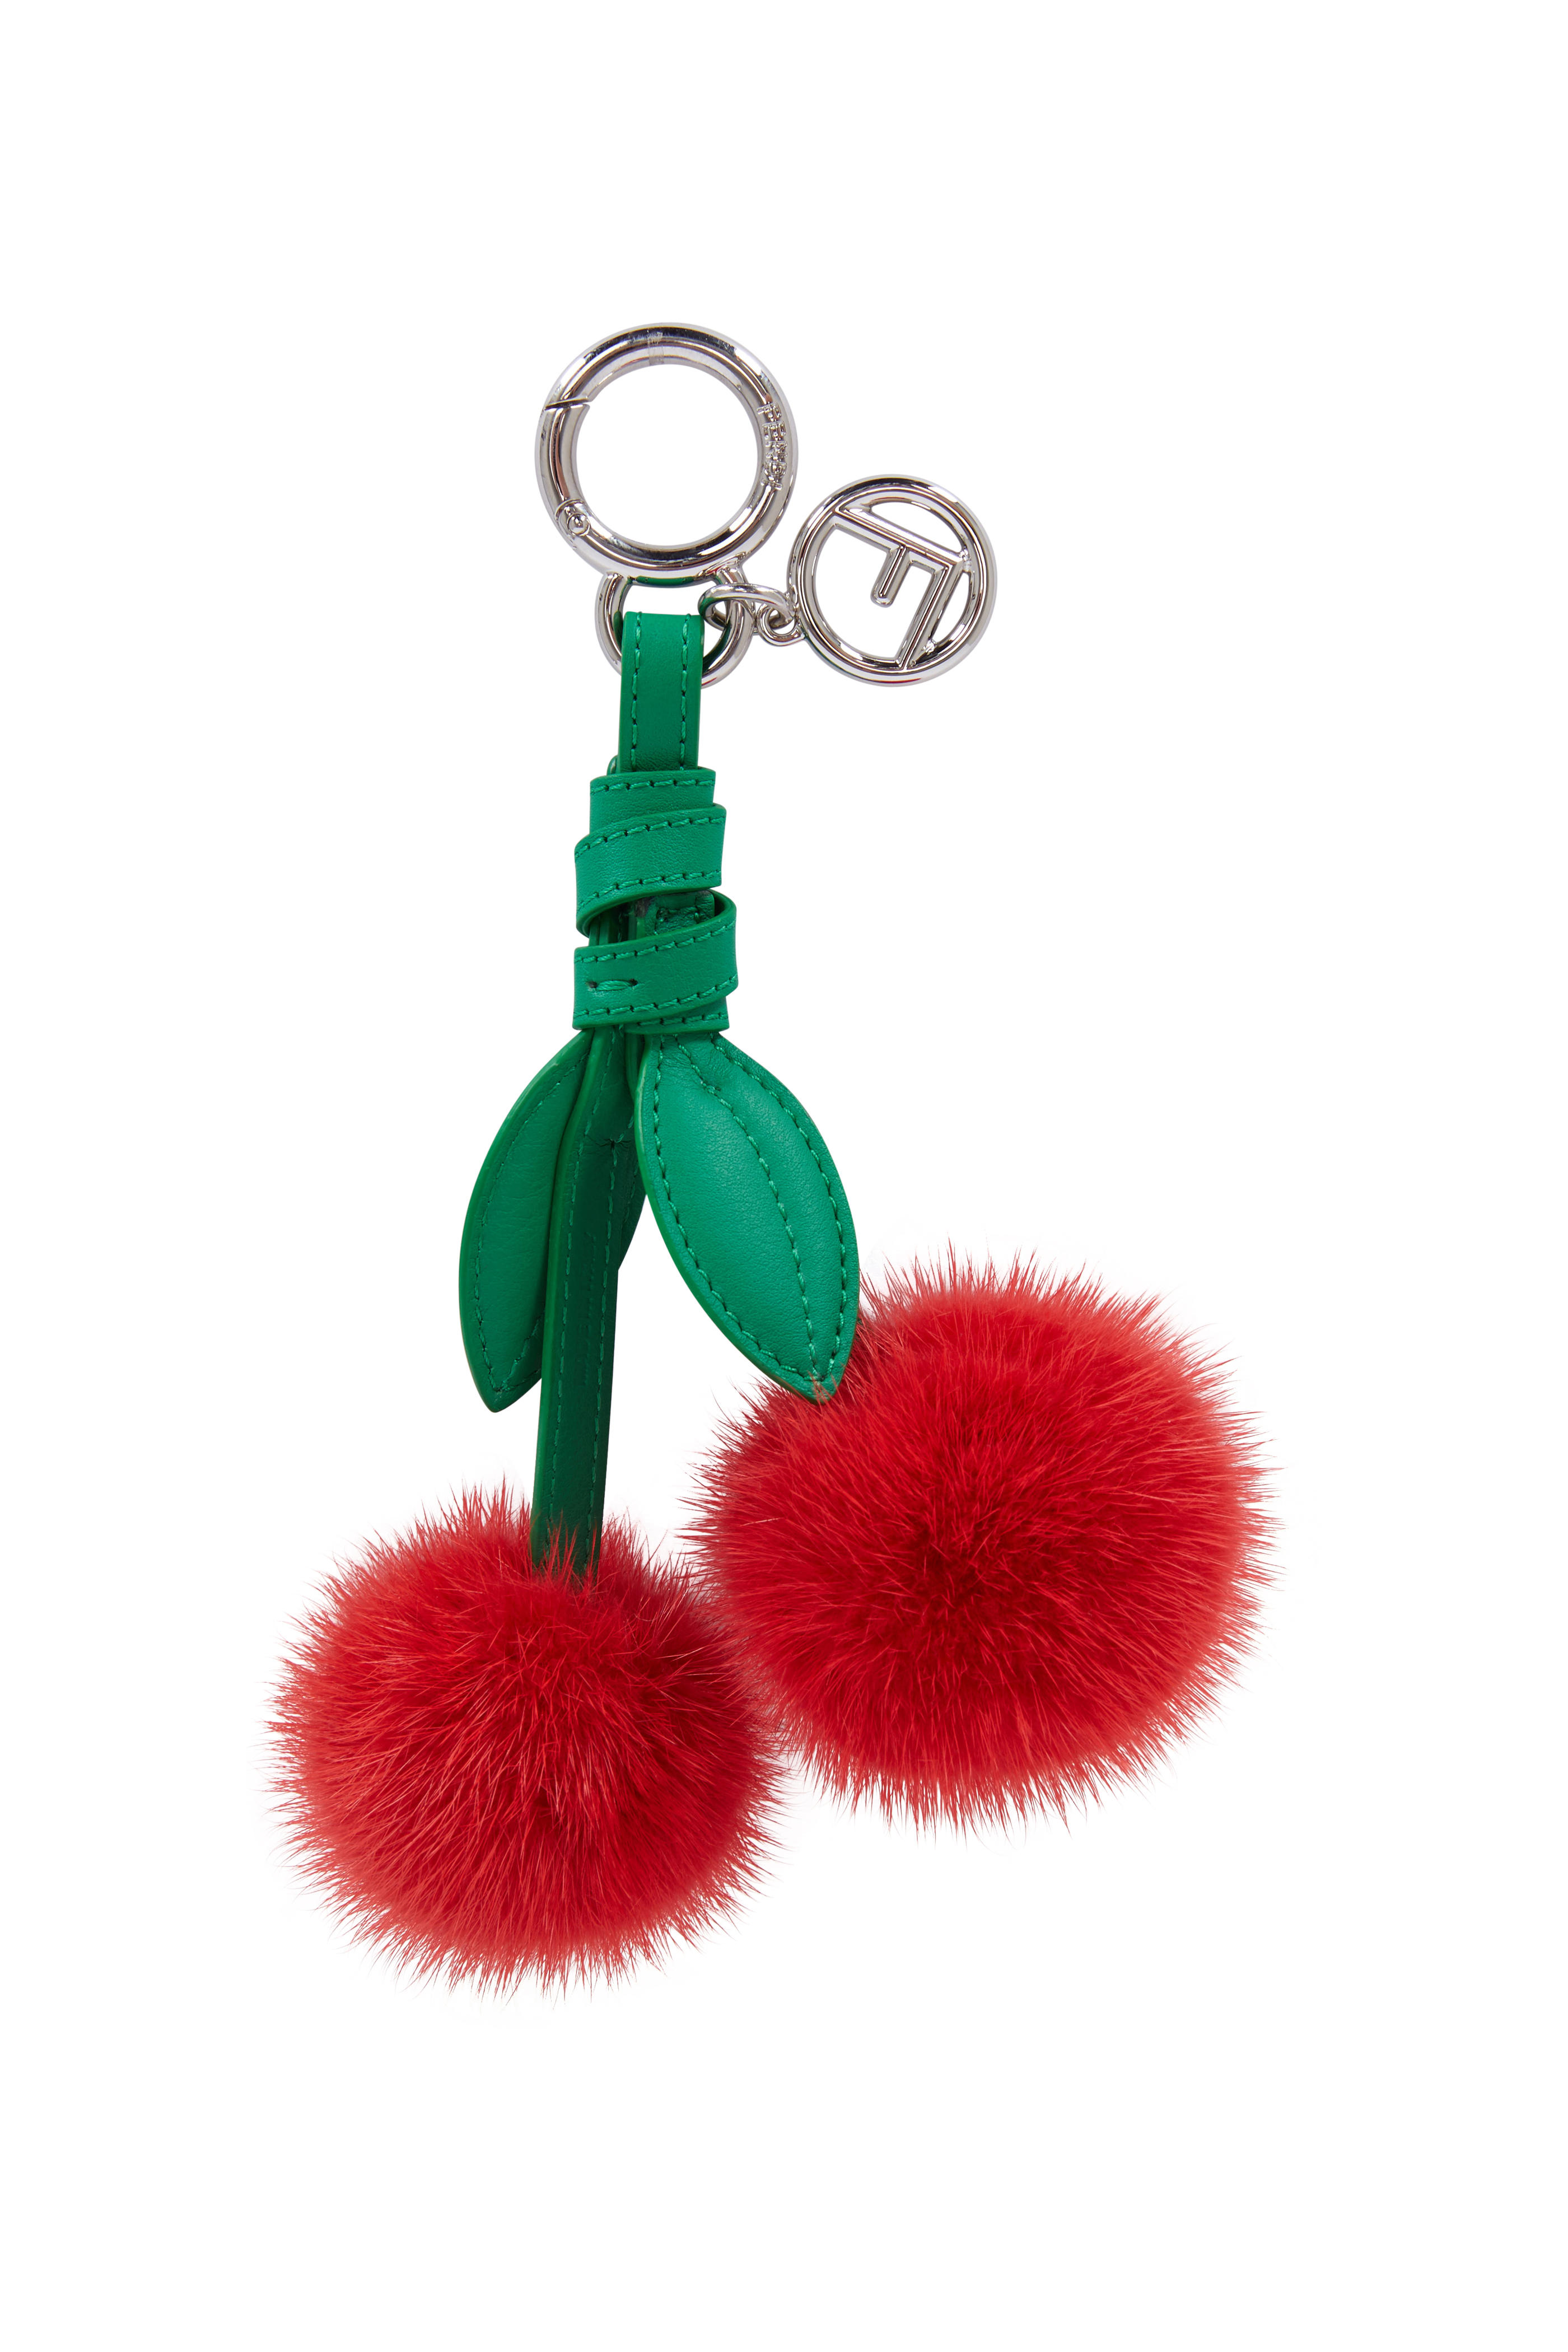 Fendi - Red Cherry Mink Bag Charm 